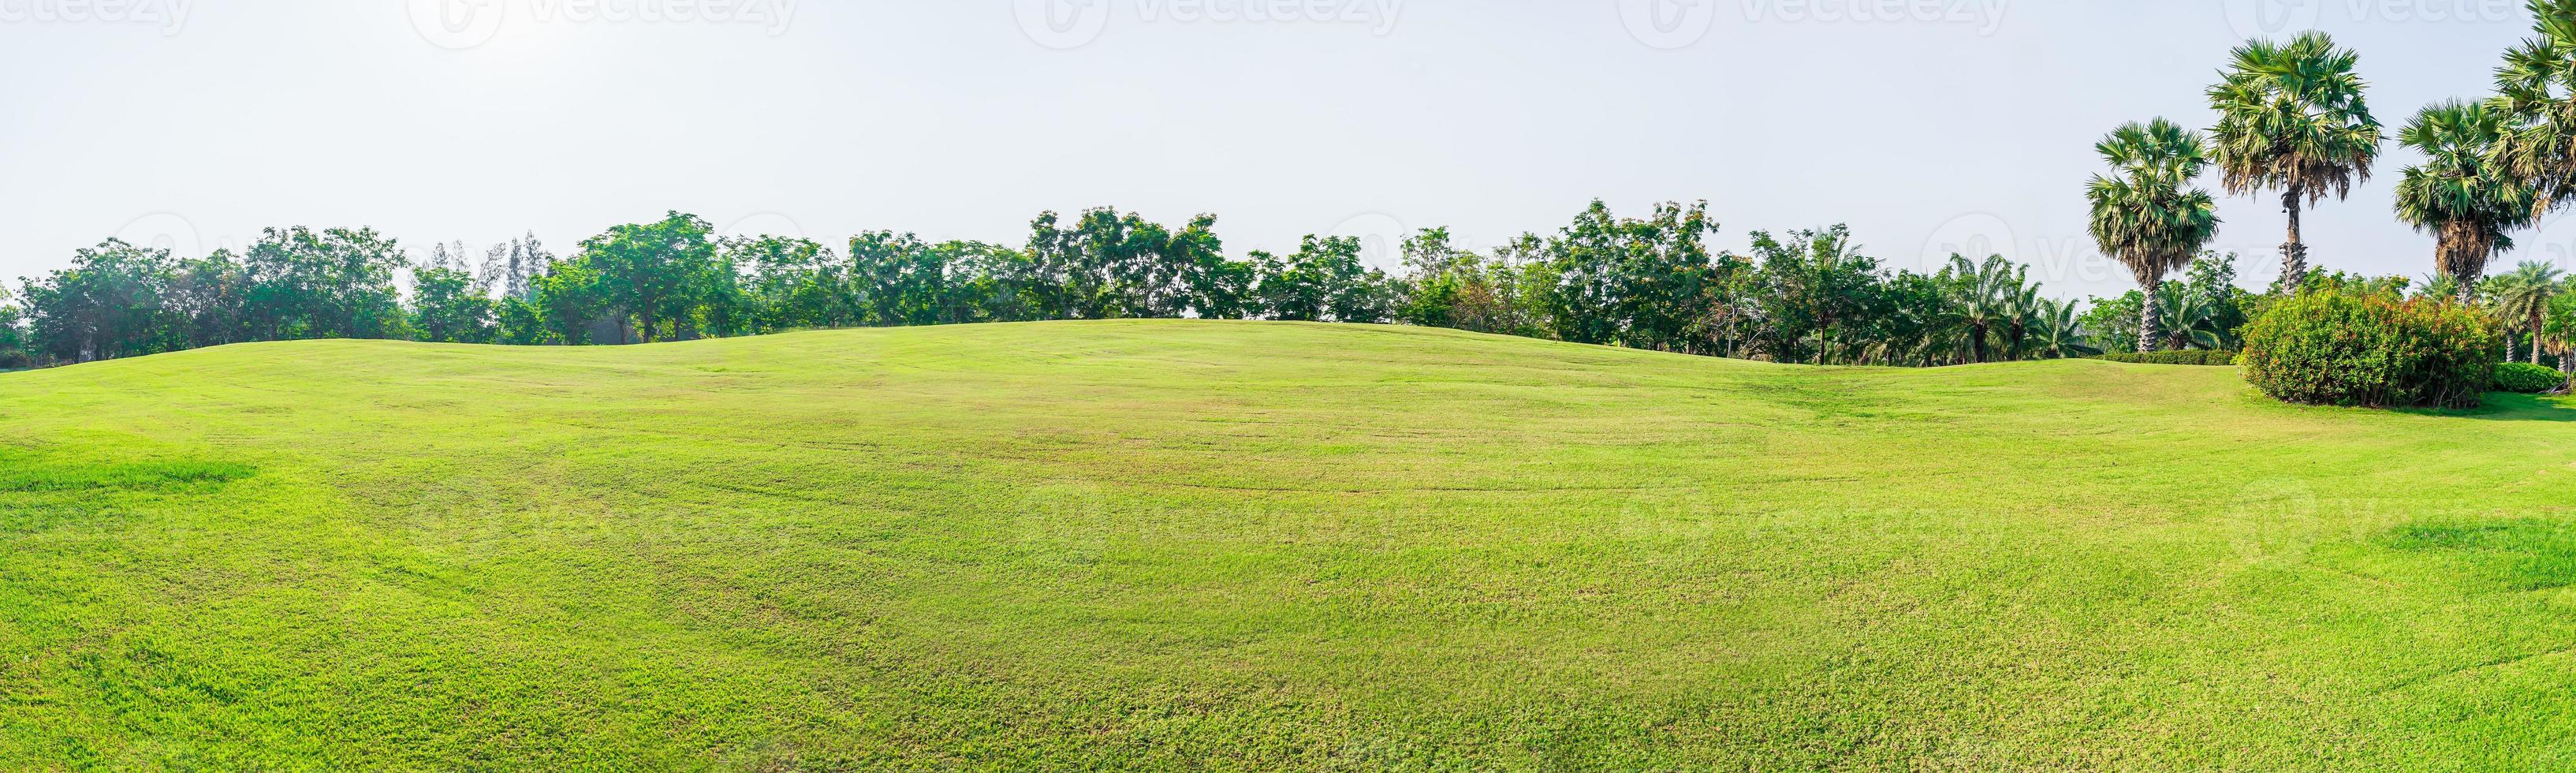 panorama verde césped en golf campo foto